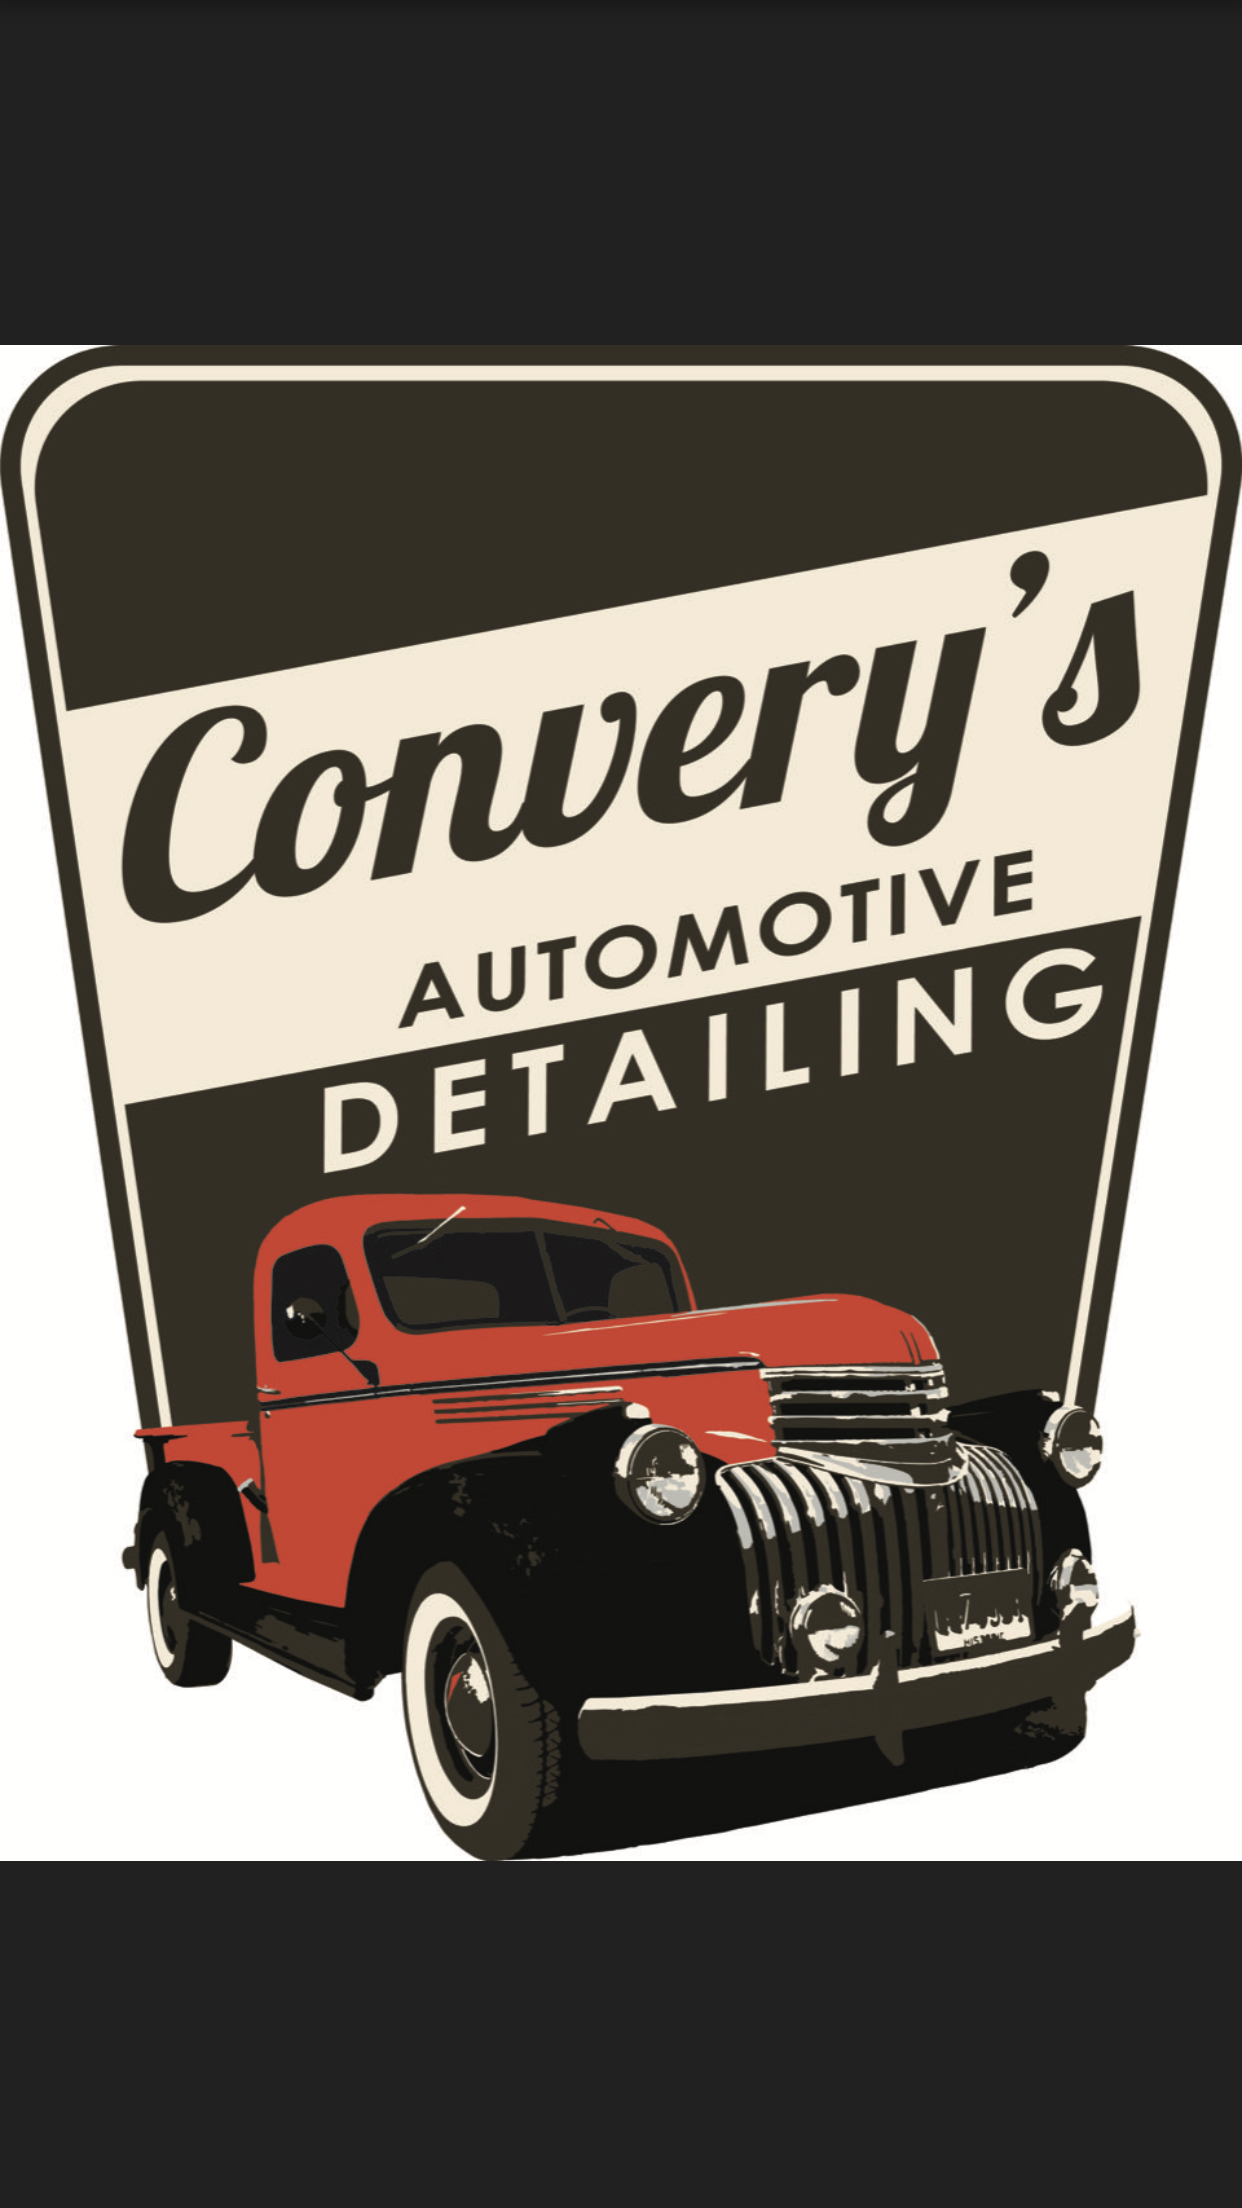 Convery’s Automotive Detailing